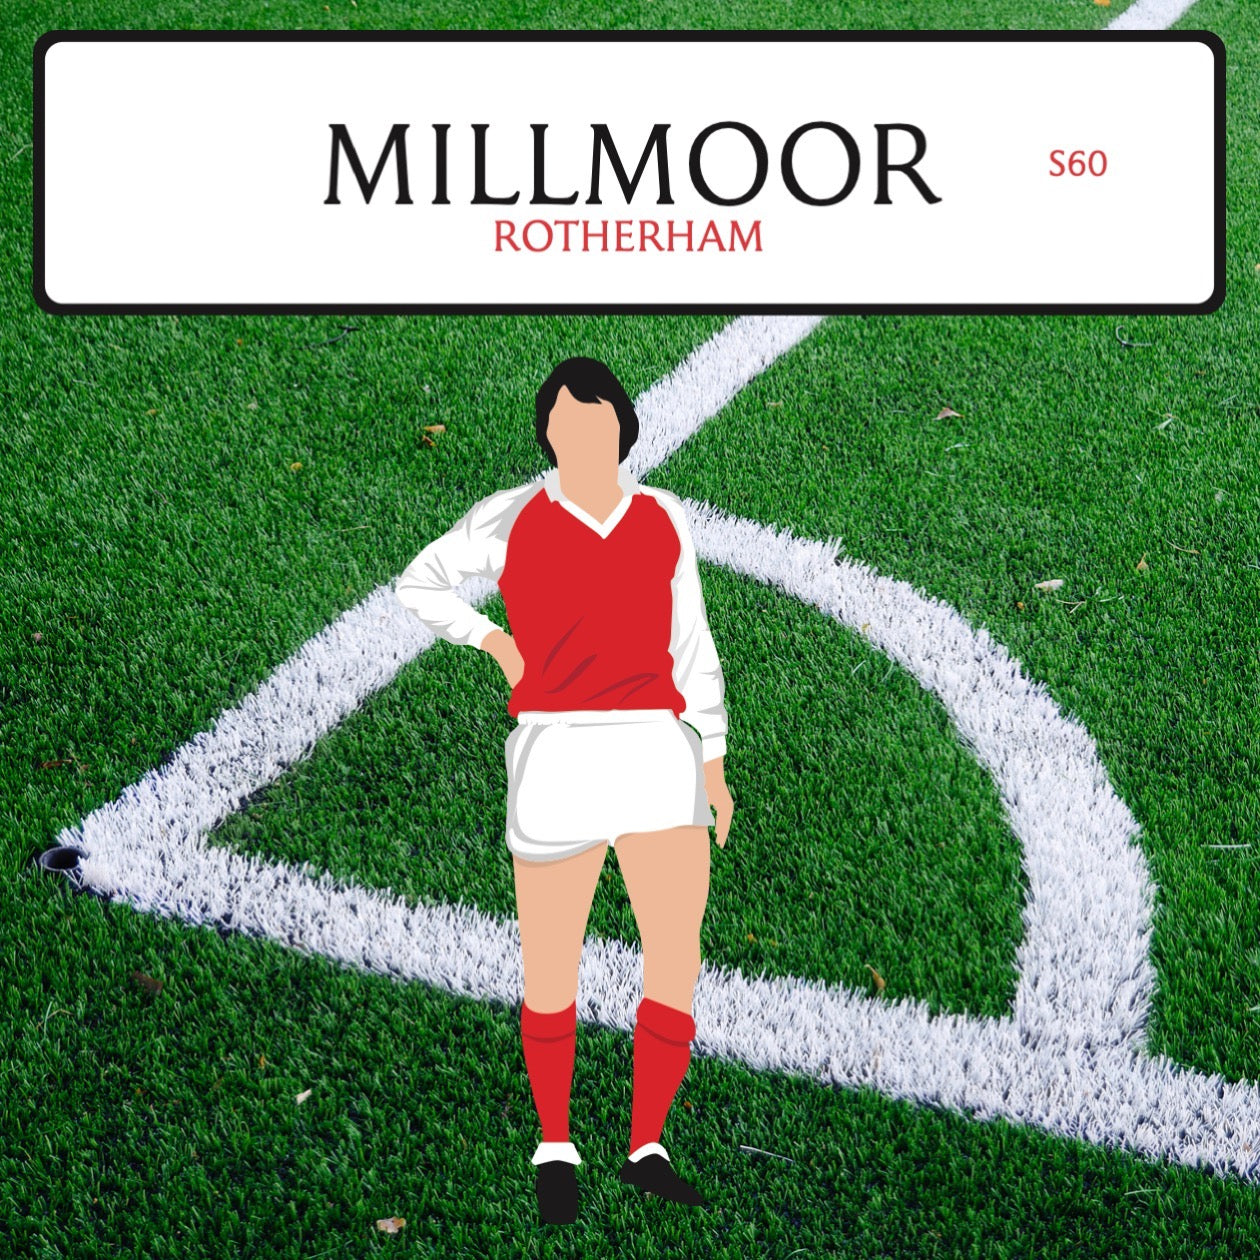 Millmoor Armchair (Rotherham United FC)